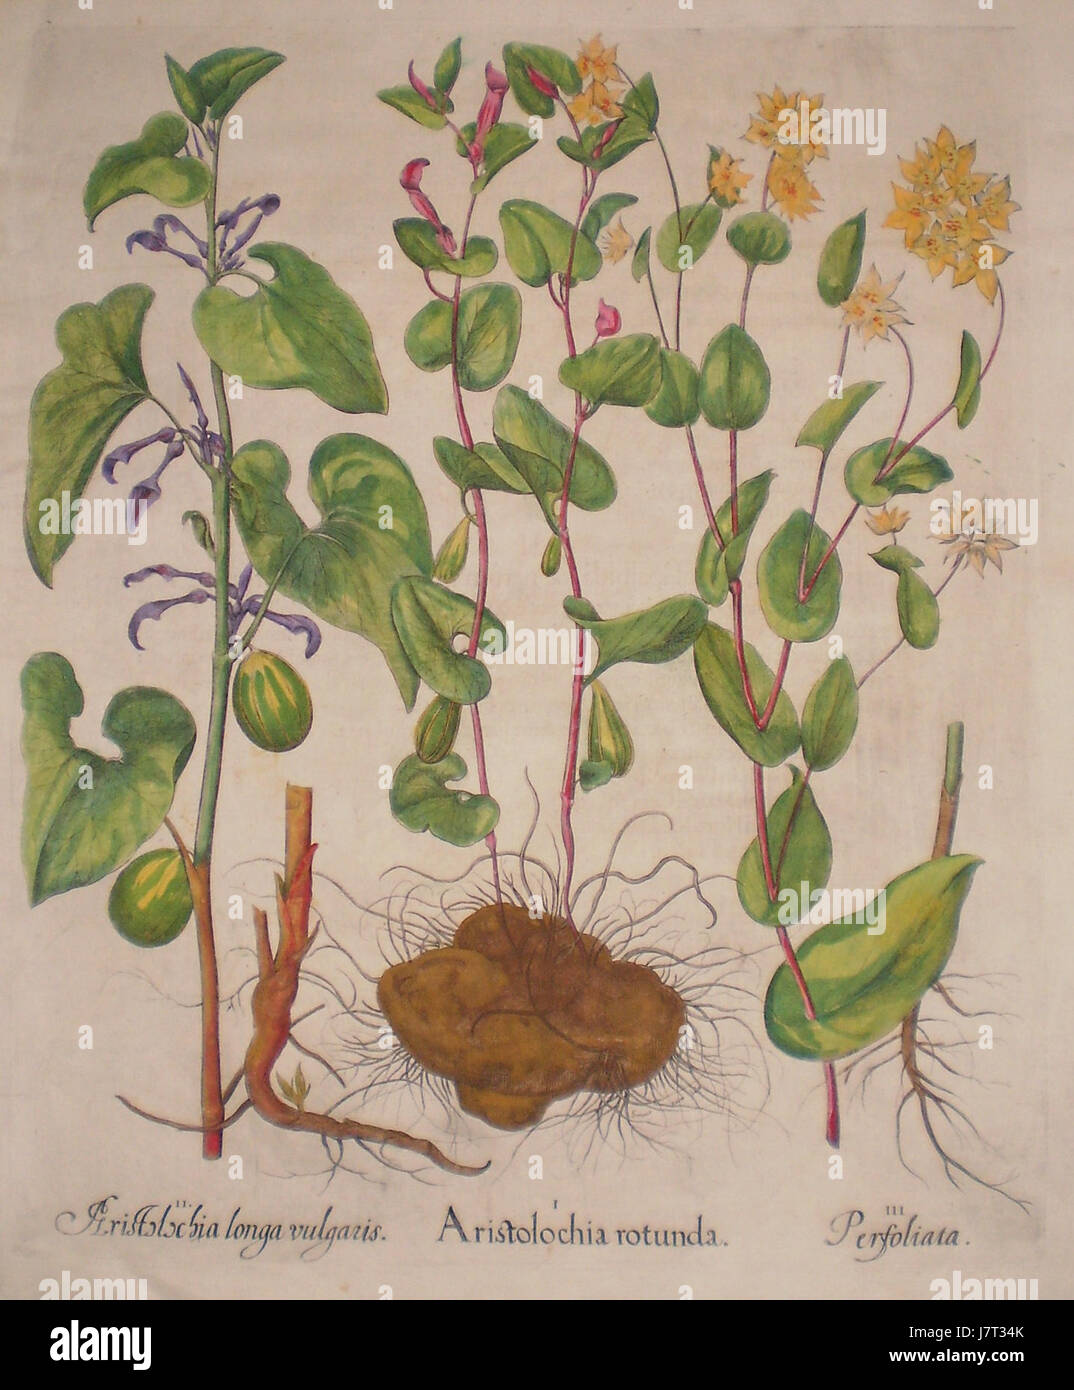 Aristolochia longa vulgaris Aristolochia rotunda Perfoliata Stock Photo